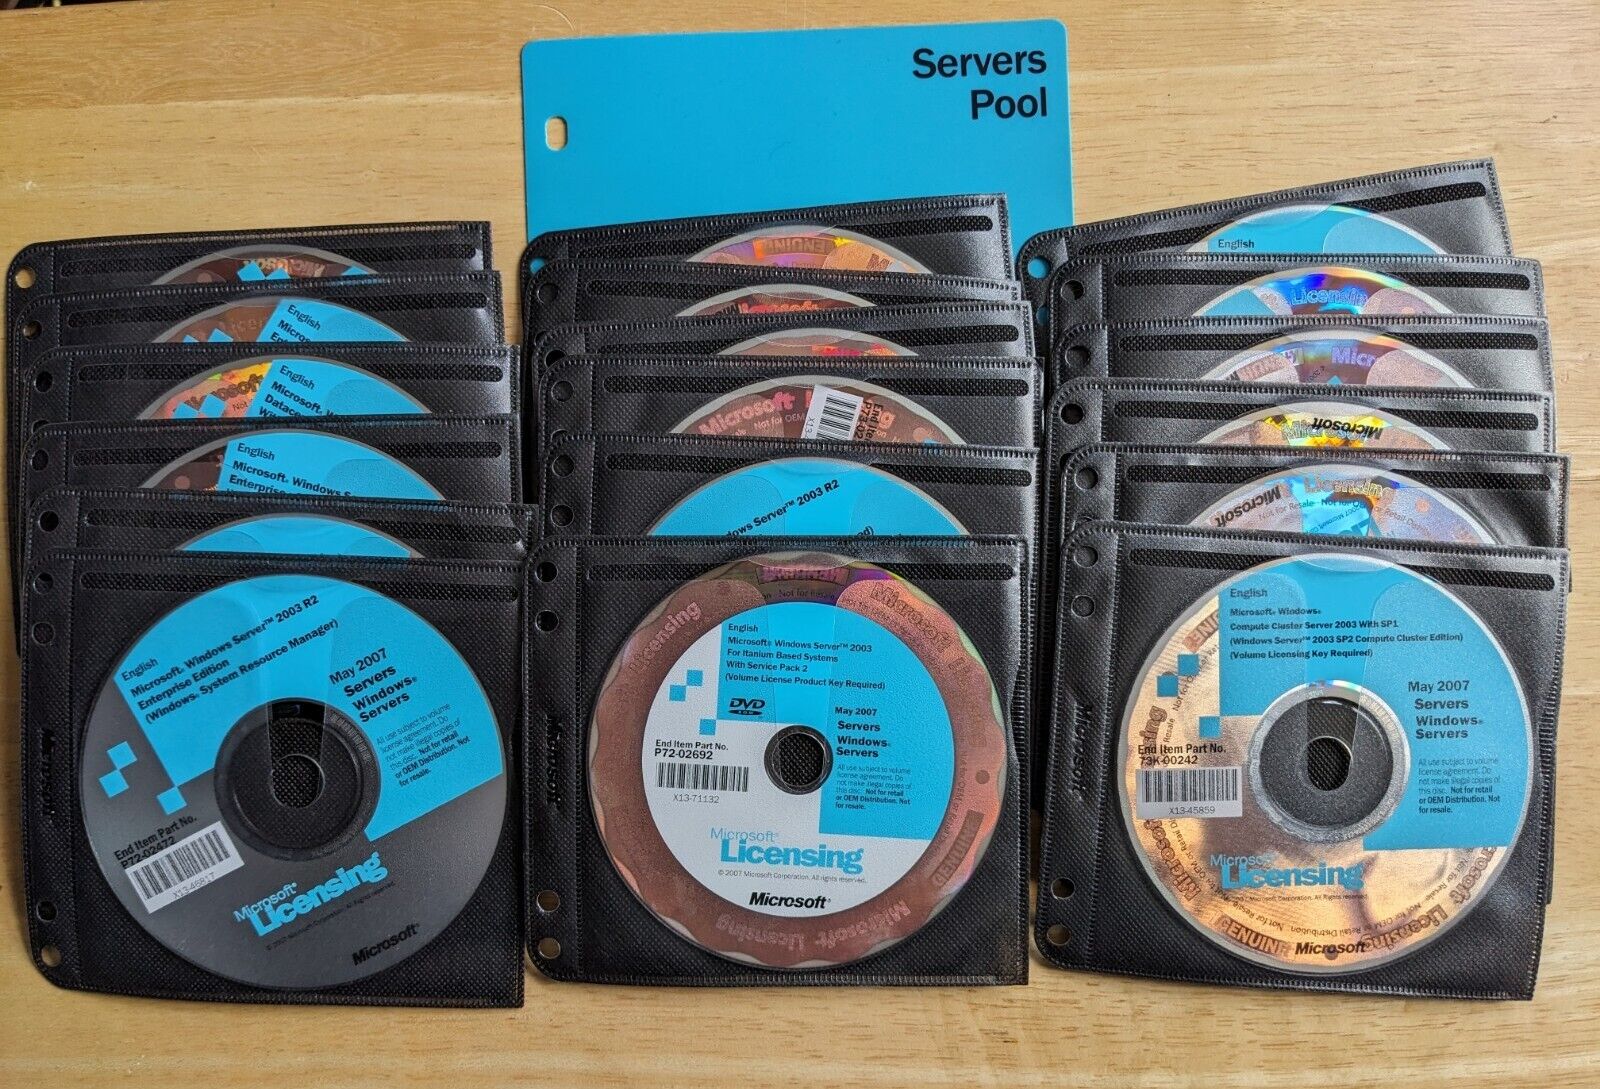 LOT MICROSOFT LICENSING SERVERS POOL 2003 32/64 BIT CD SET - 18 Discs - Preowned